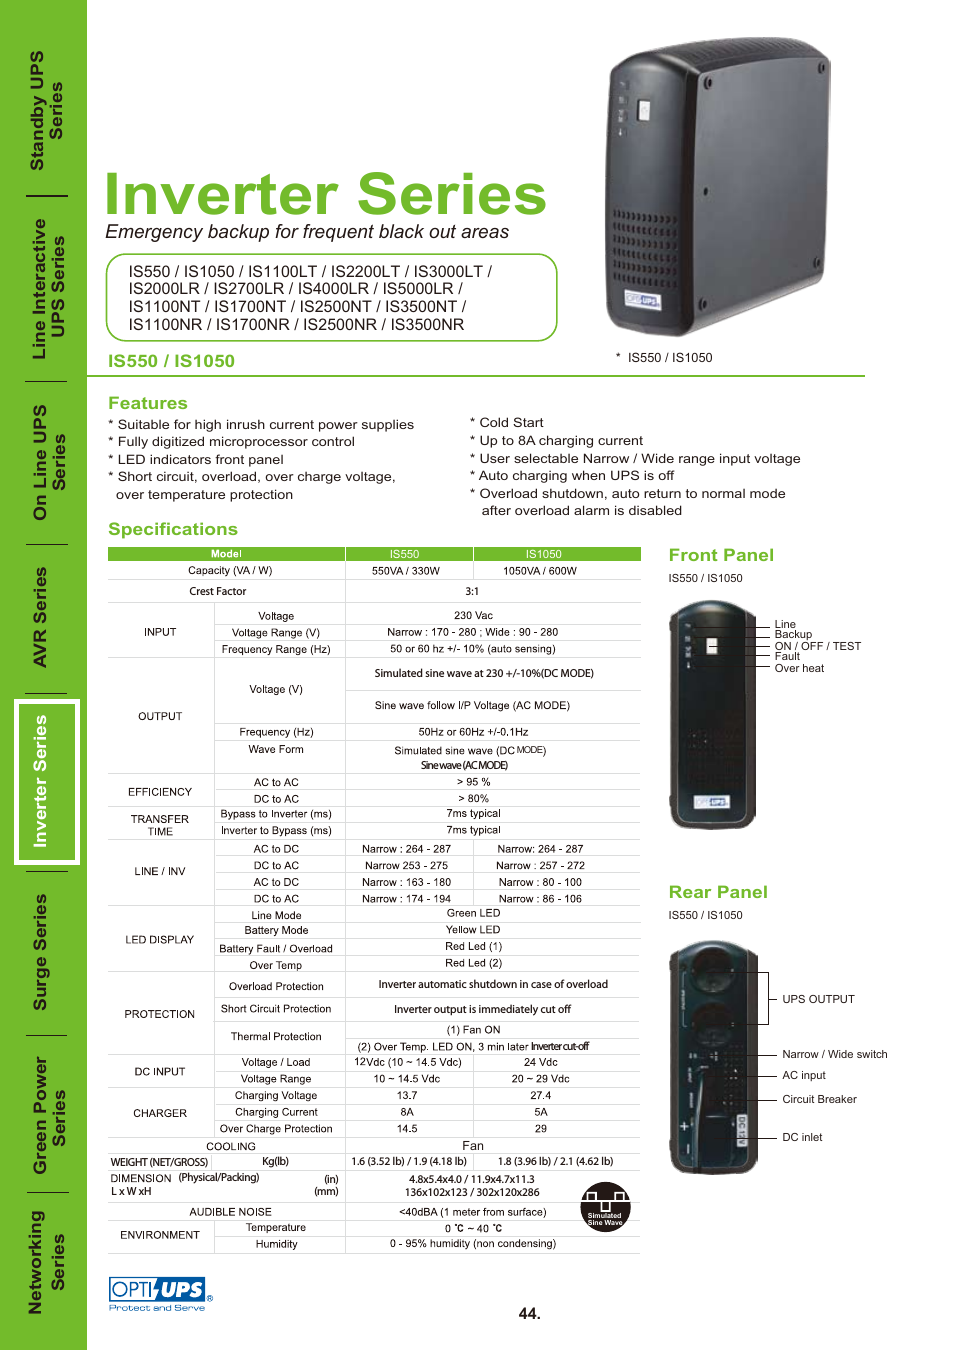 Inverter Series IS1050